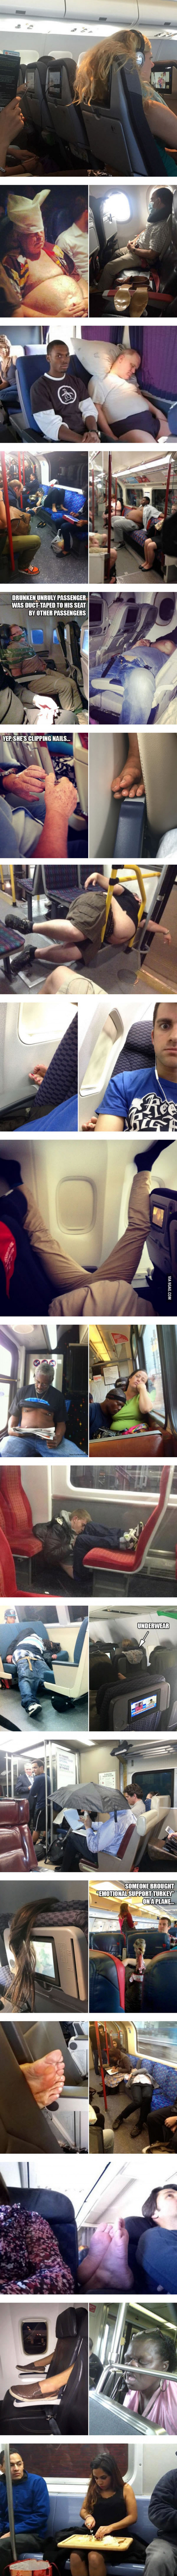 Passengers You DO NOT Want Sitting Near You